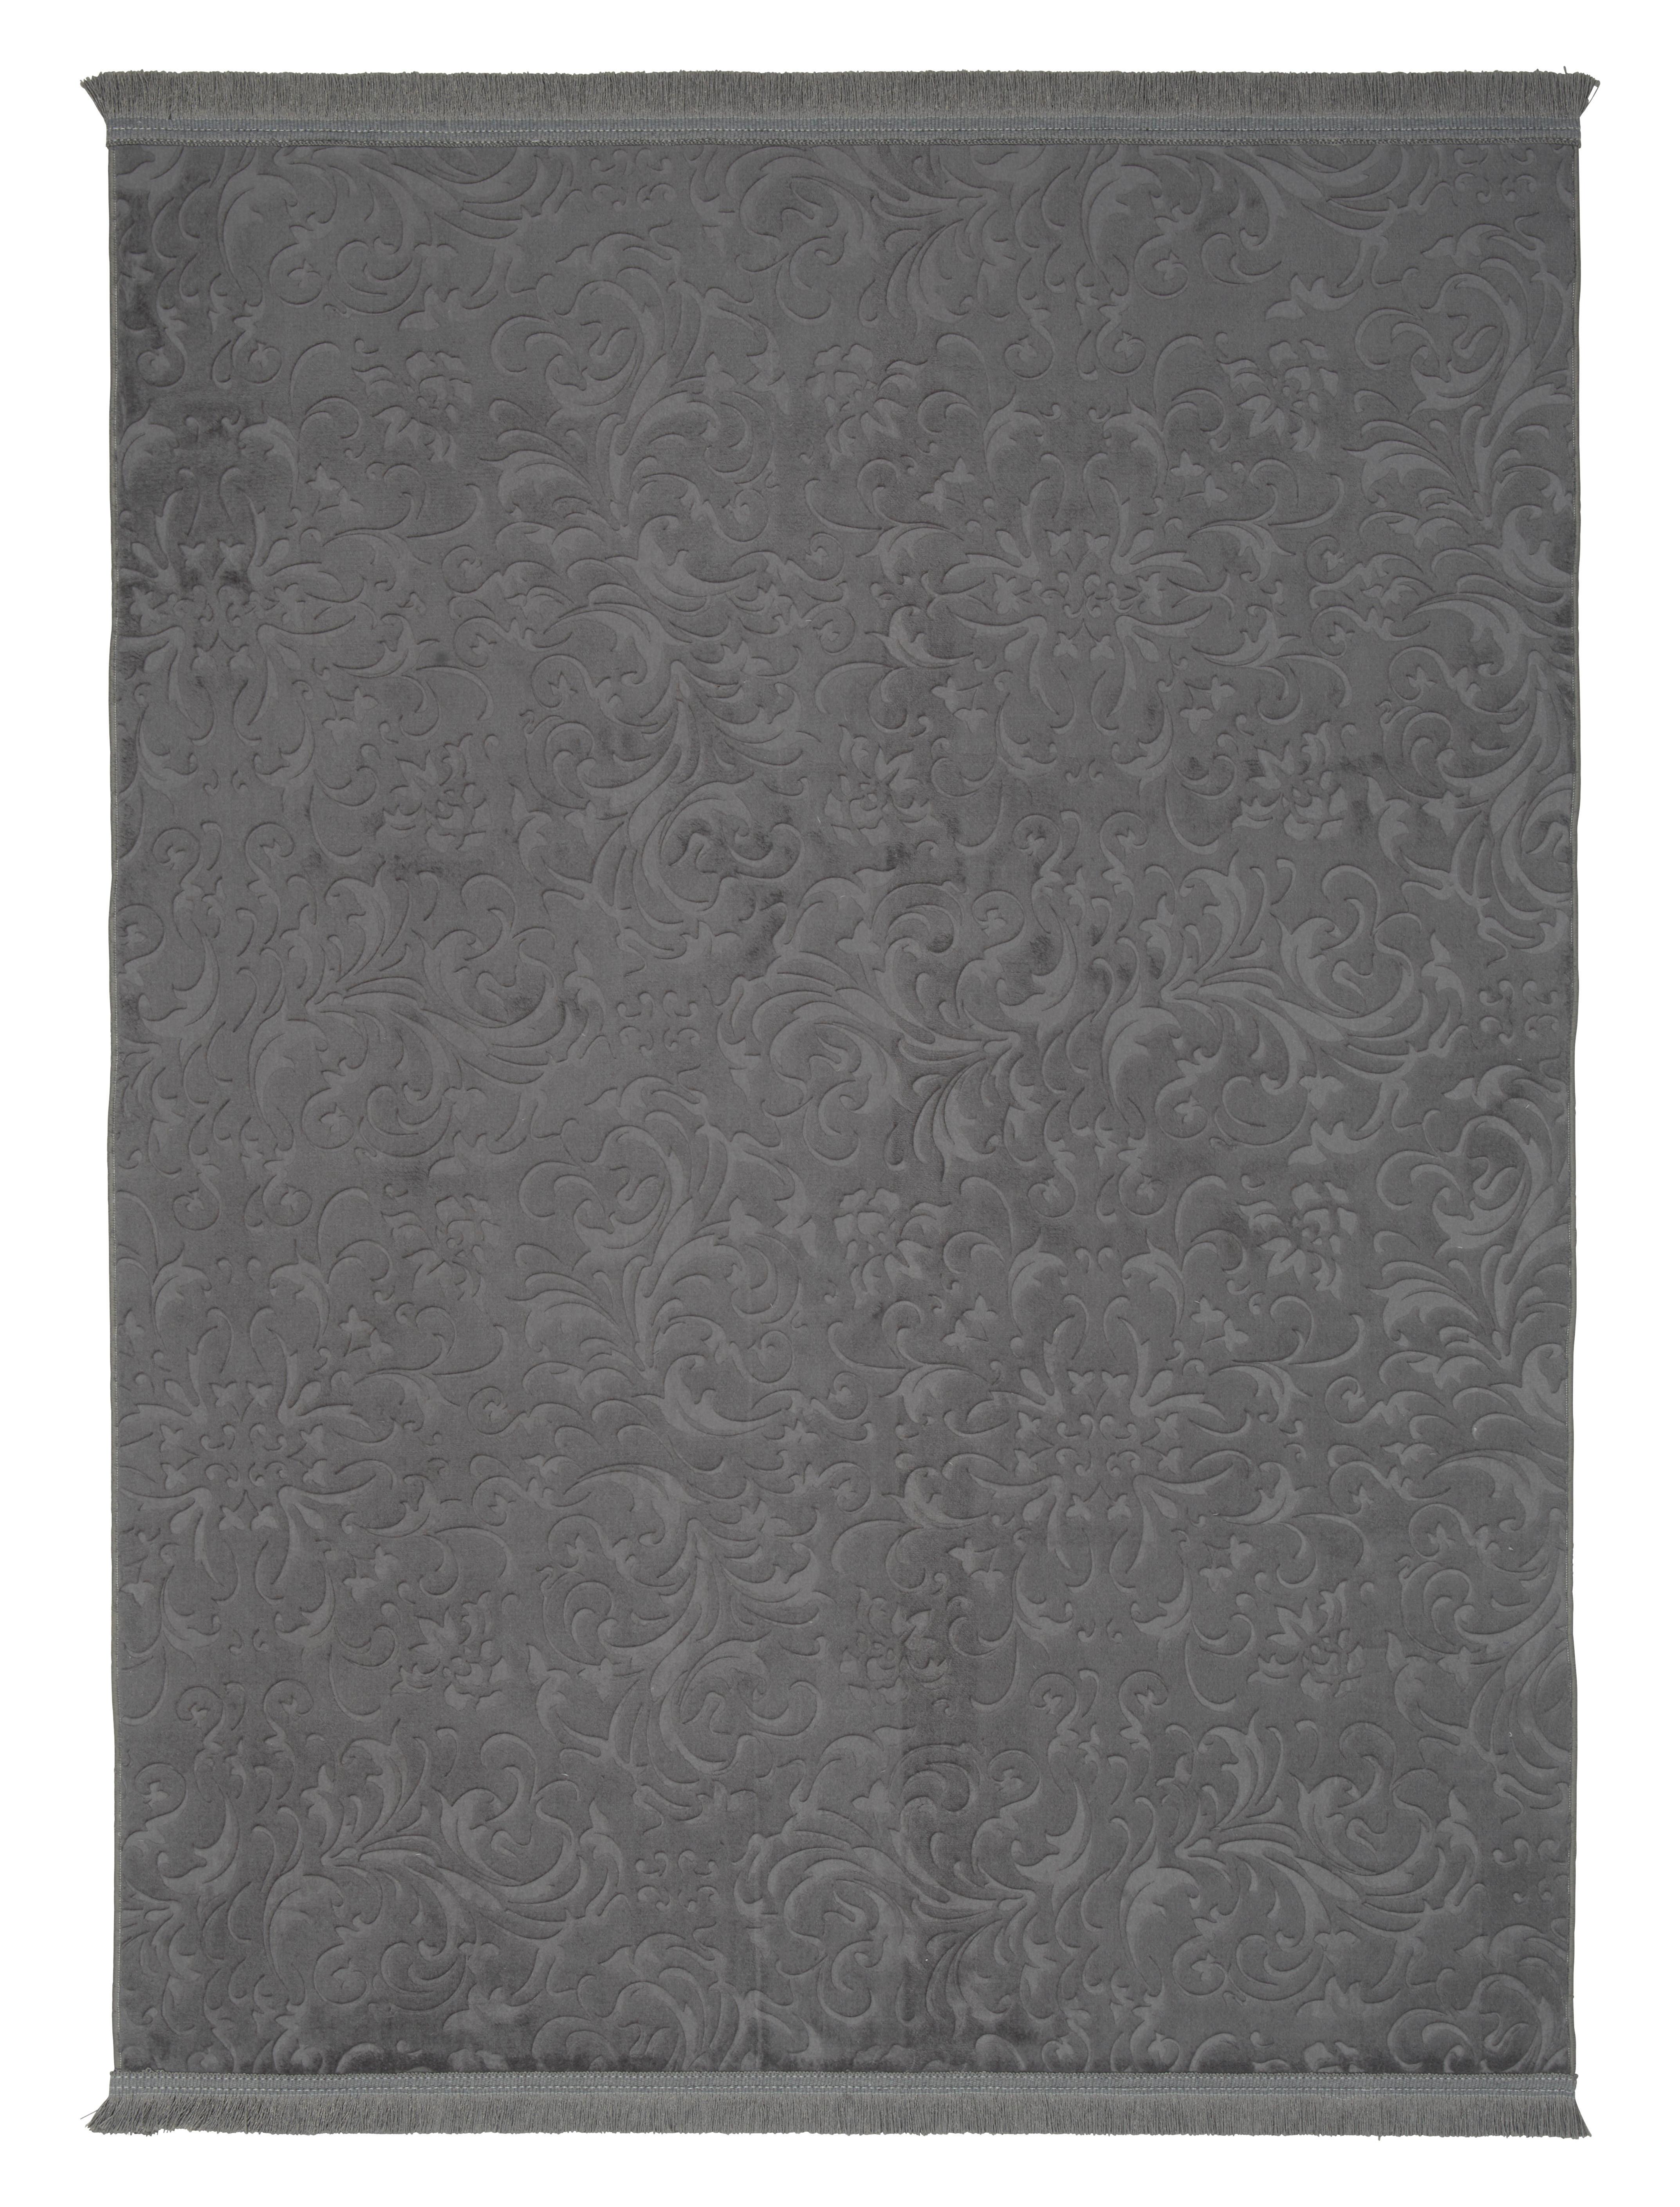 Tkaný Koberec Daphne 2, 120/160cm, Antracit - antracitová, Moderný, textil (120/160cm) - Modern Living